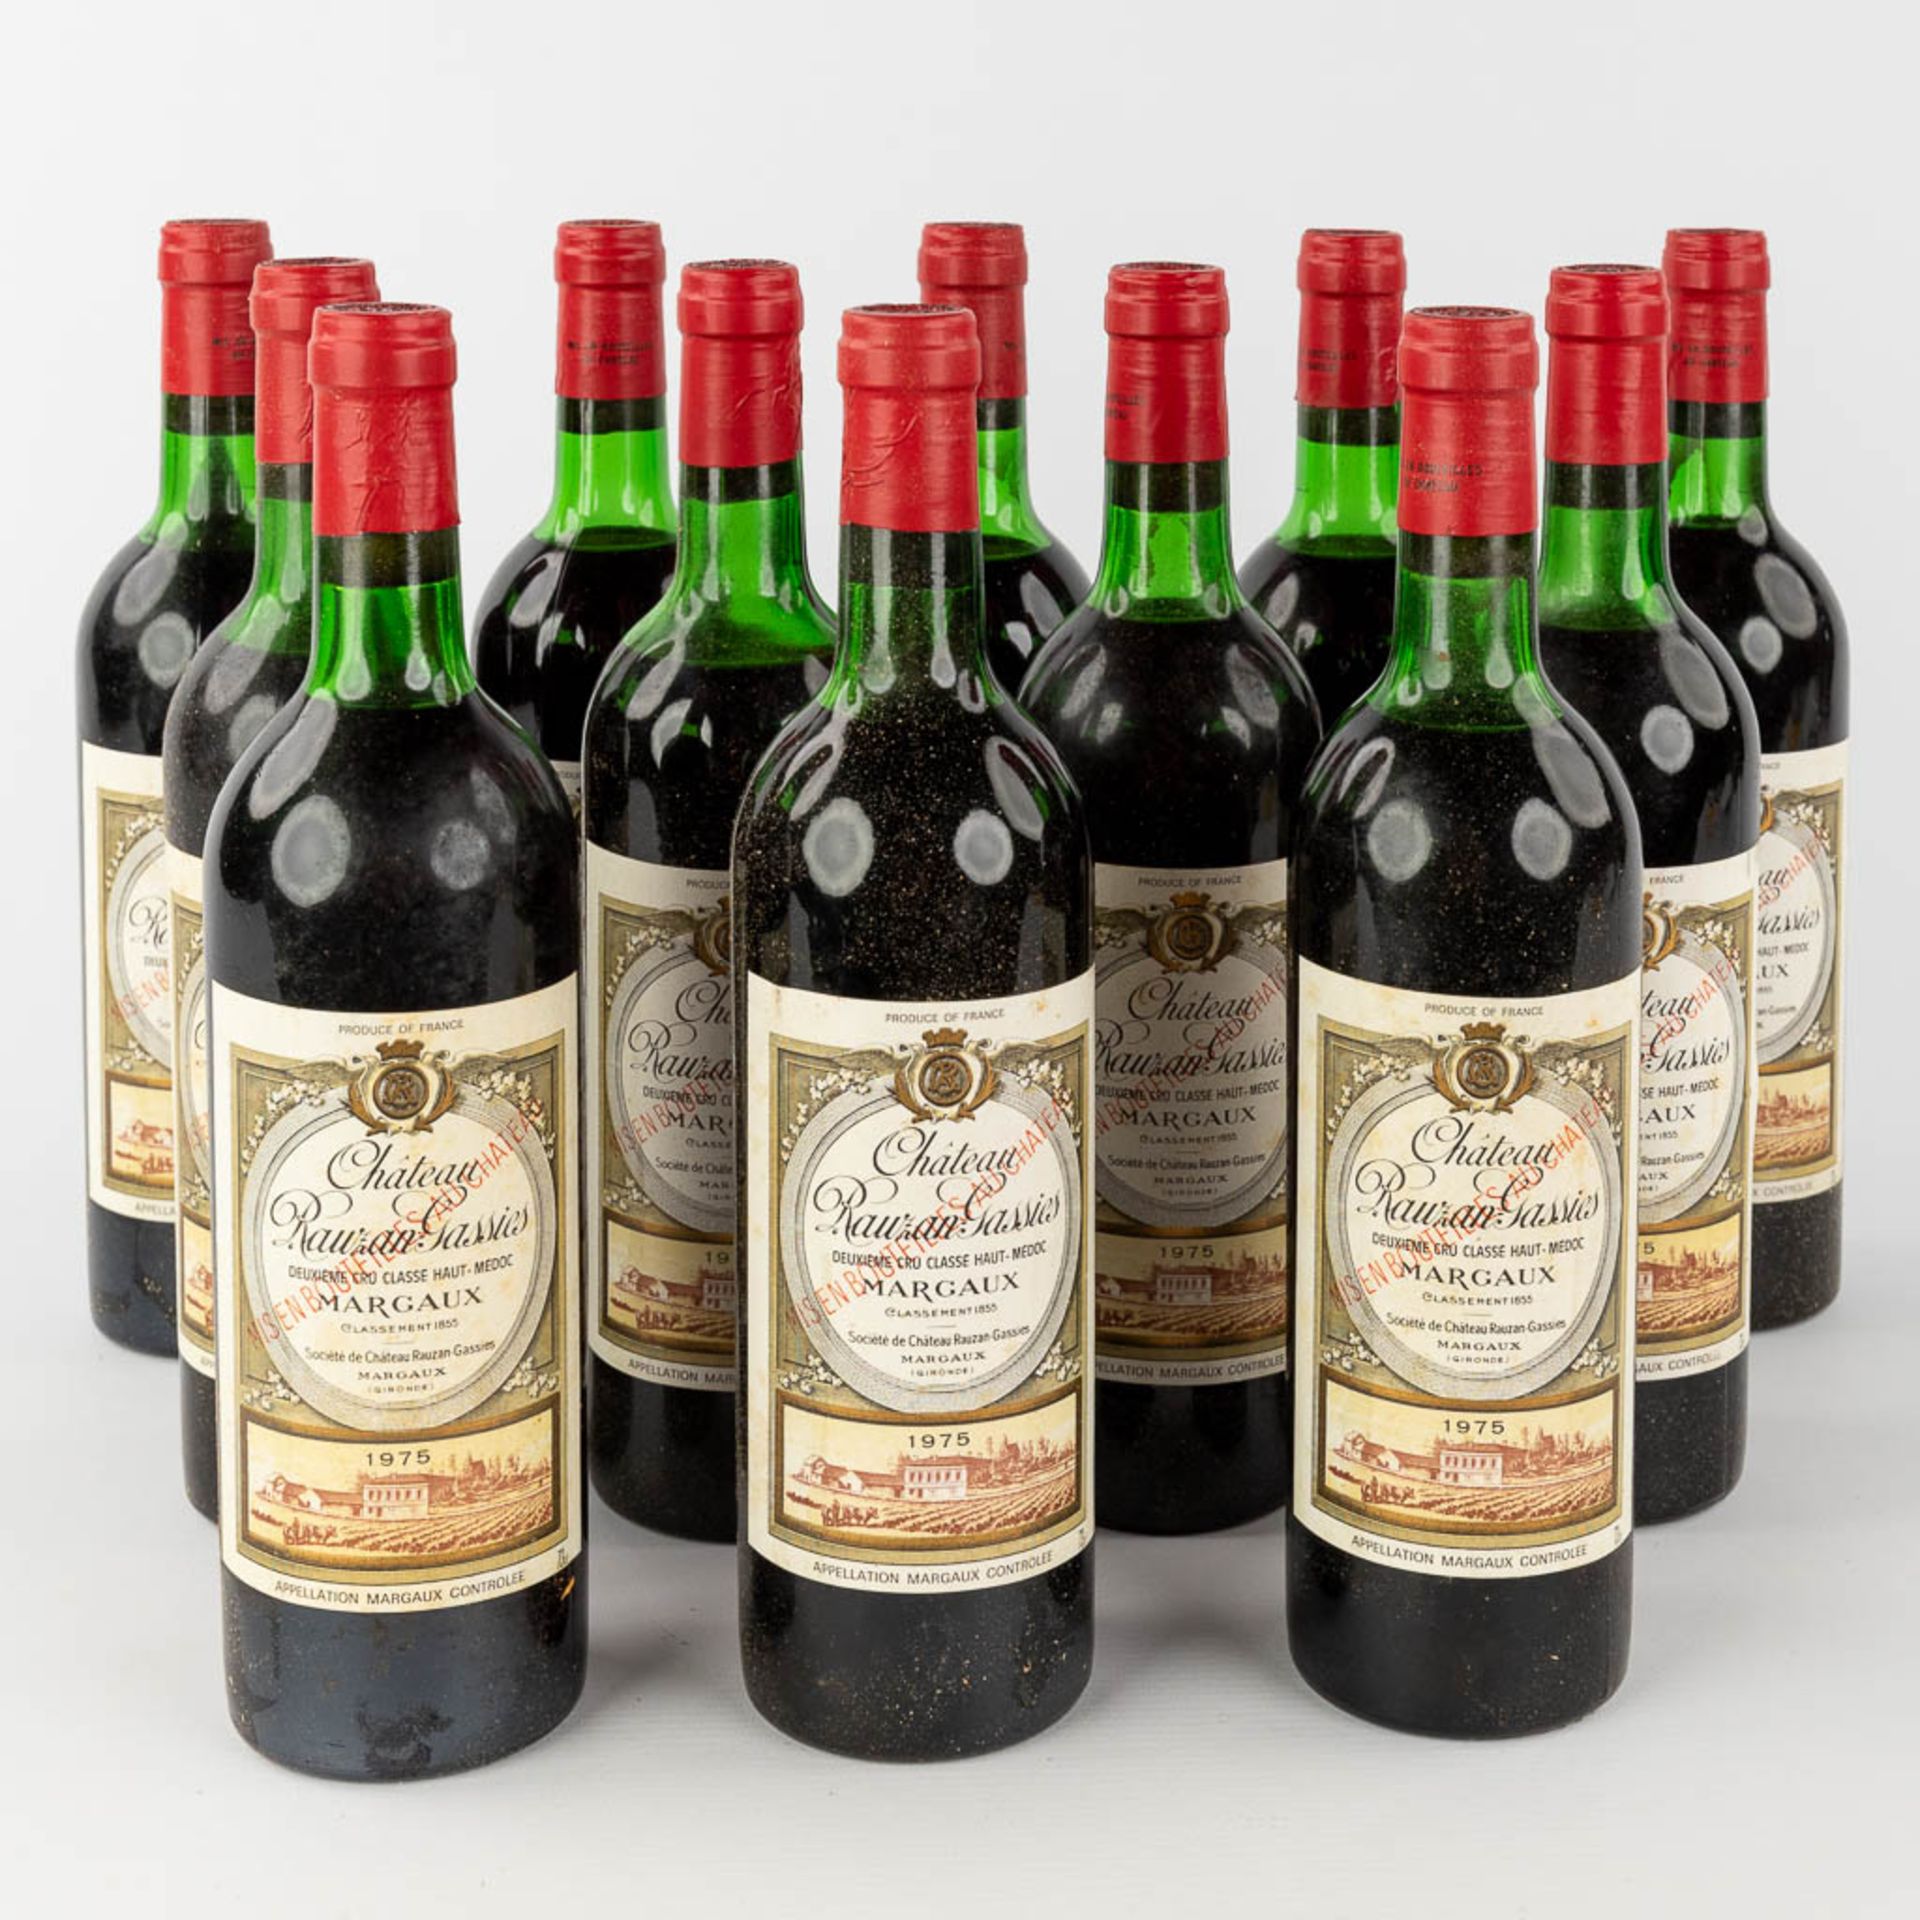 Château Rauzan Gassies Margaux, 1975, 12 bottles